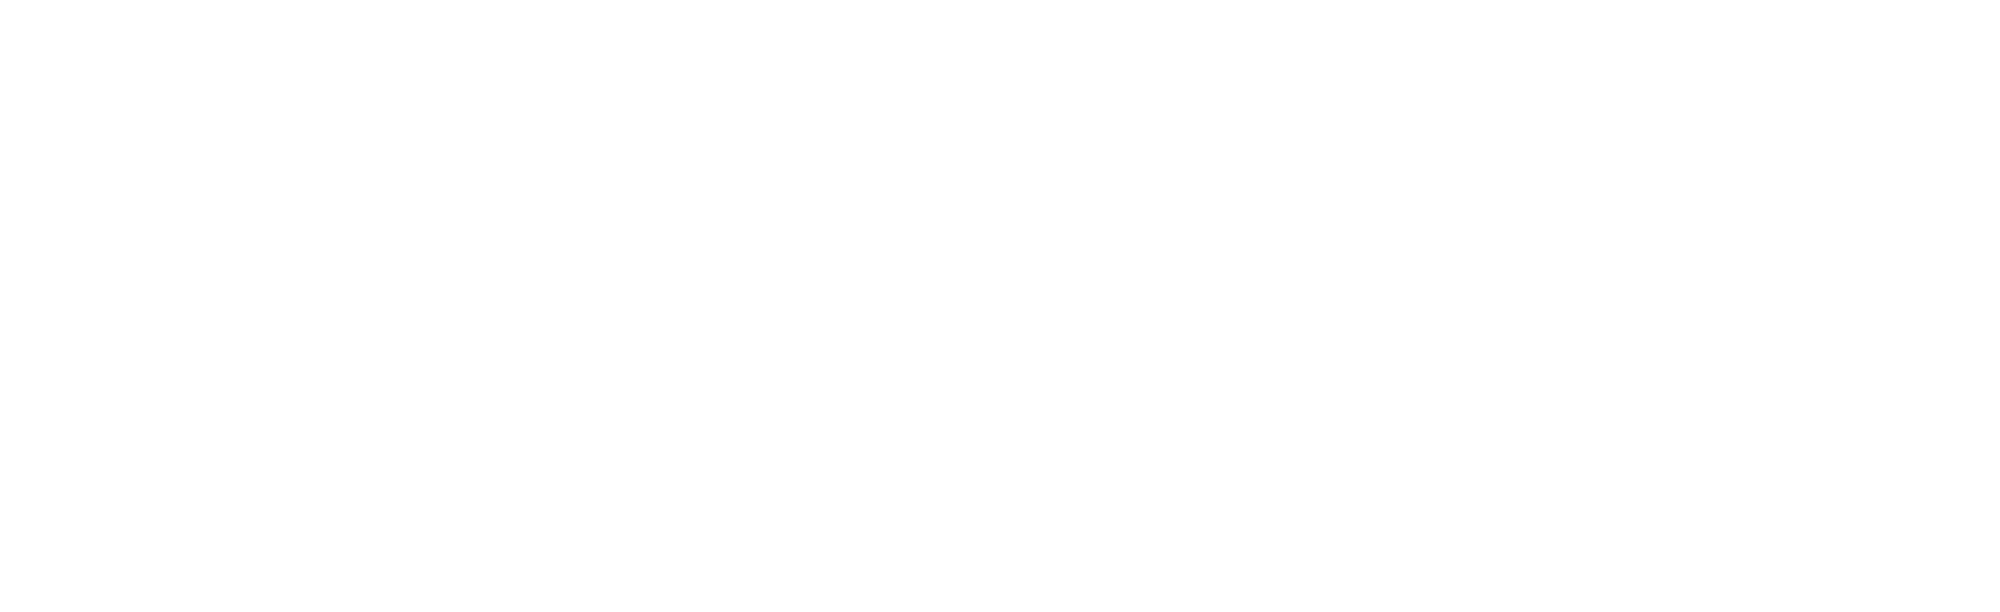 McNary Marketing & Design